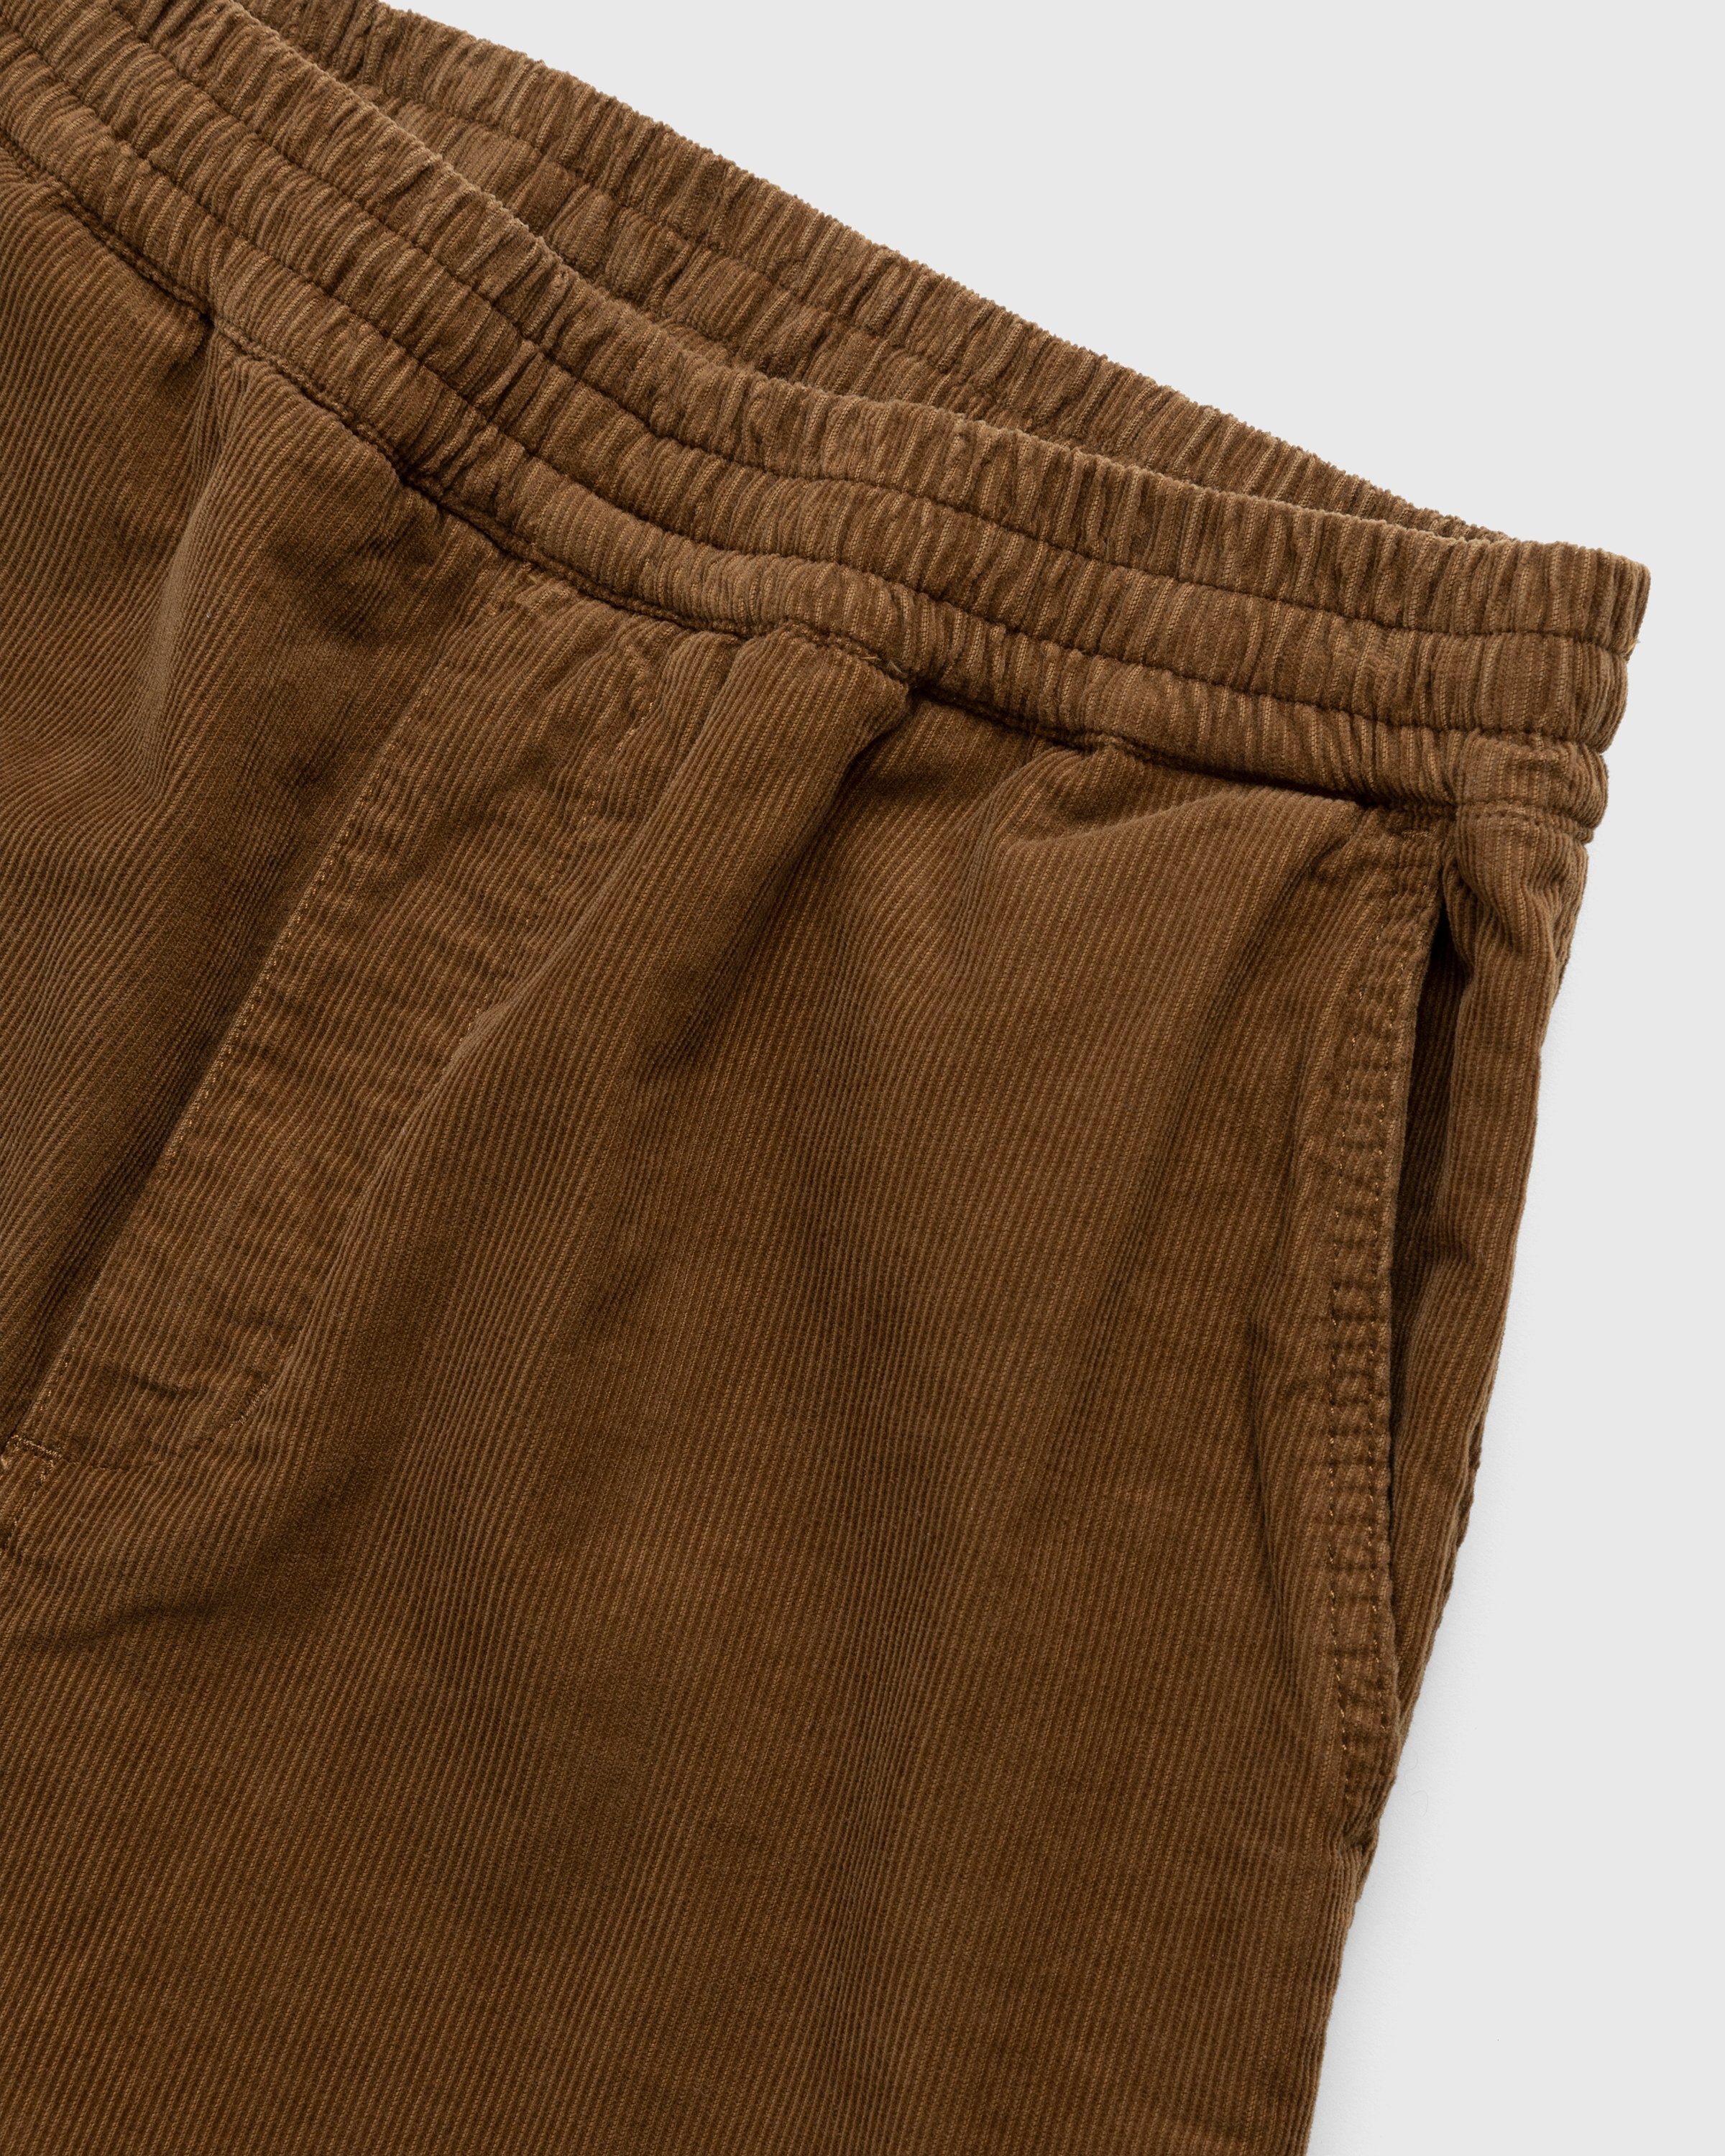 Carhartt WIP – Flint Pant Hamilton Brown Rinsed - Trousers - Brown - Image 6